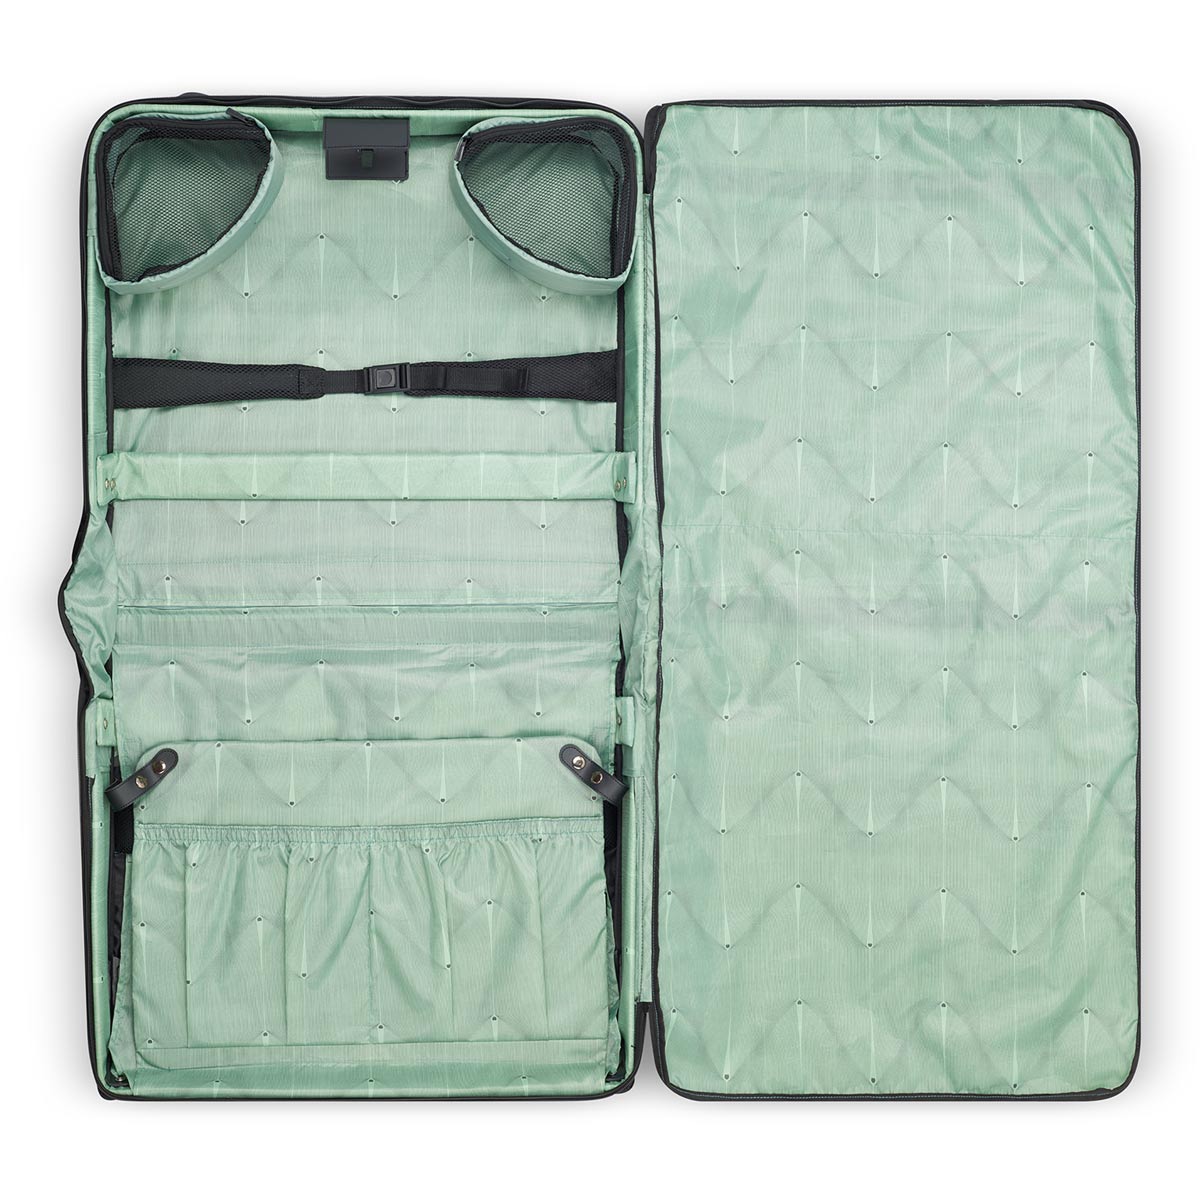 Delsey Sky Max 2.0 Wheel Garment Bag